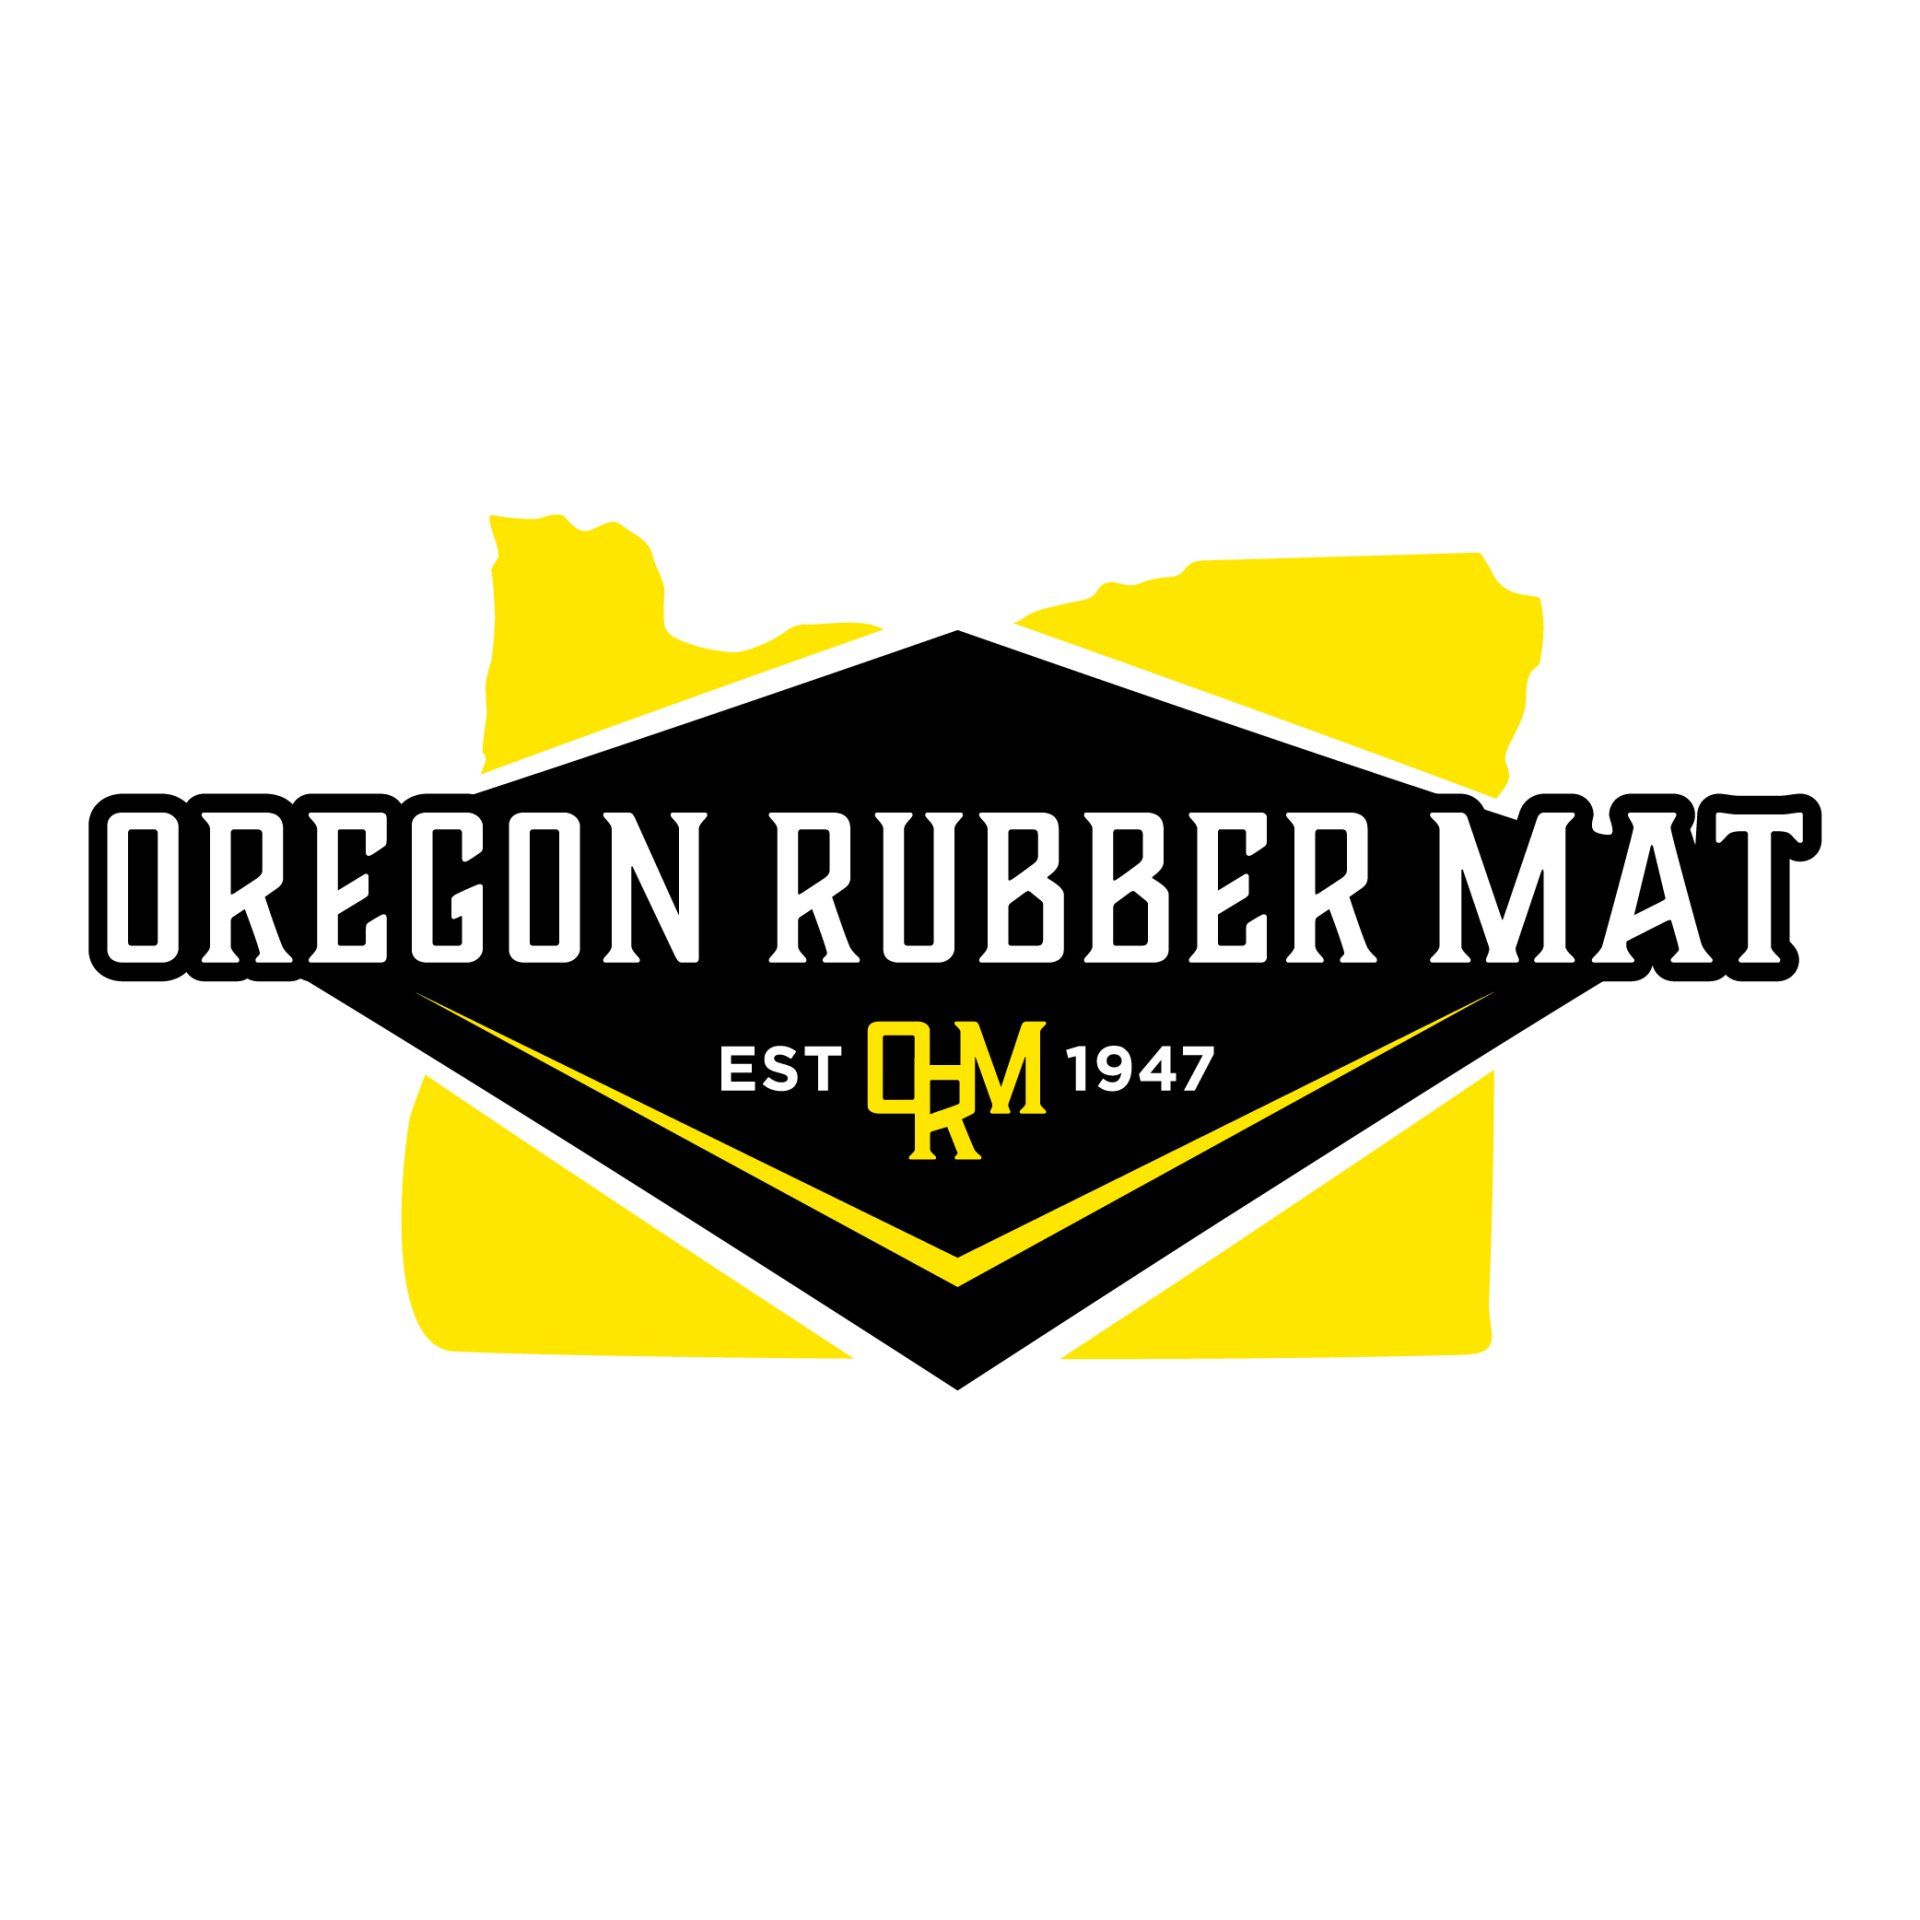 Buitenboordmotor opwinding Parameters High-Quality Rubber Mats | Hubbard, OR | Oregon Rubber Mat